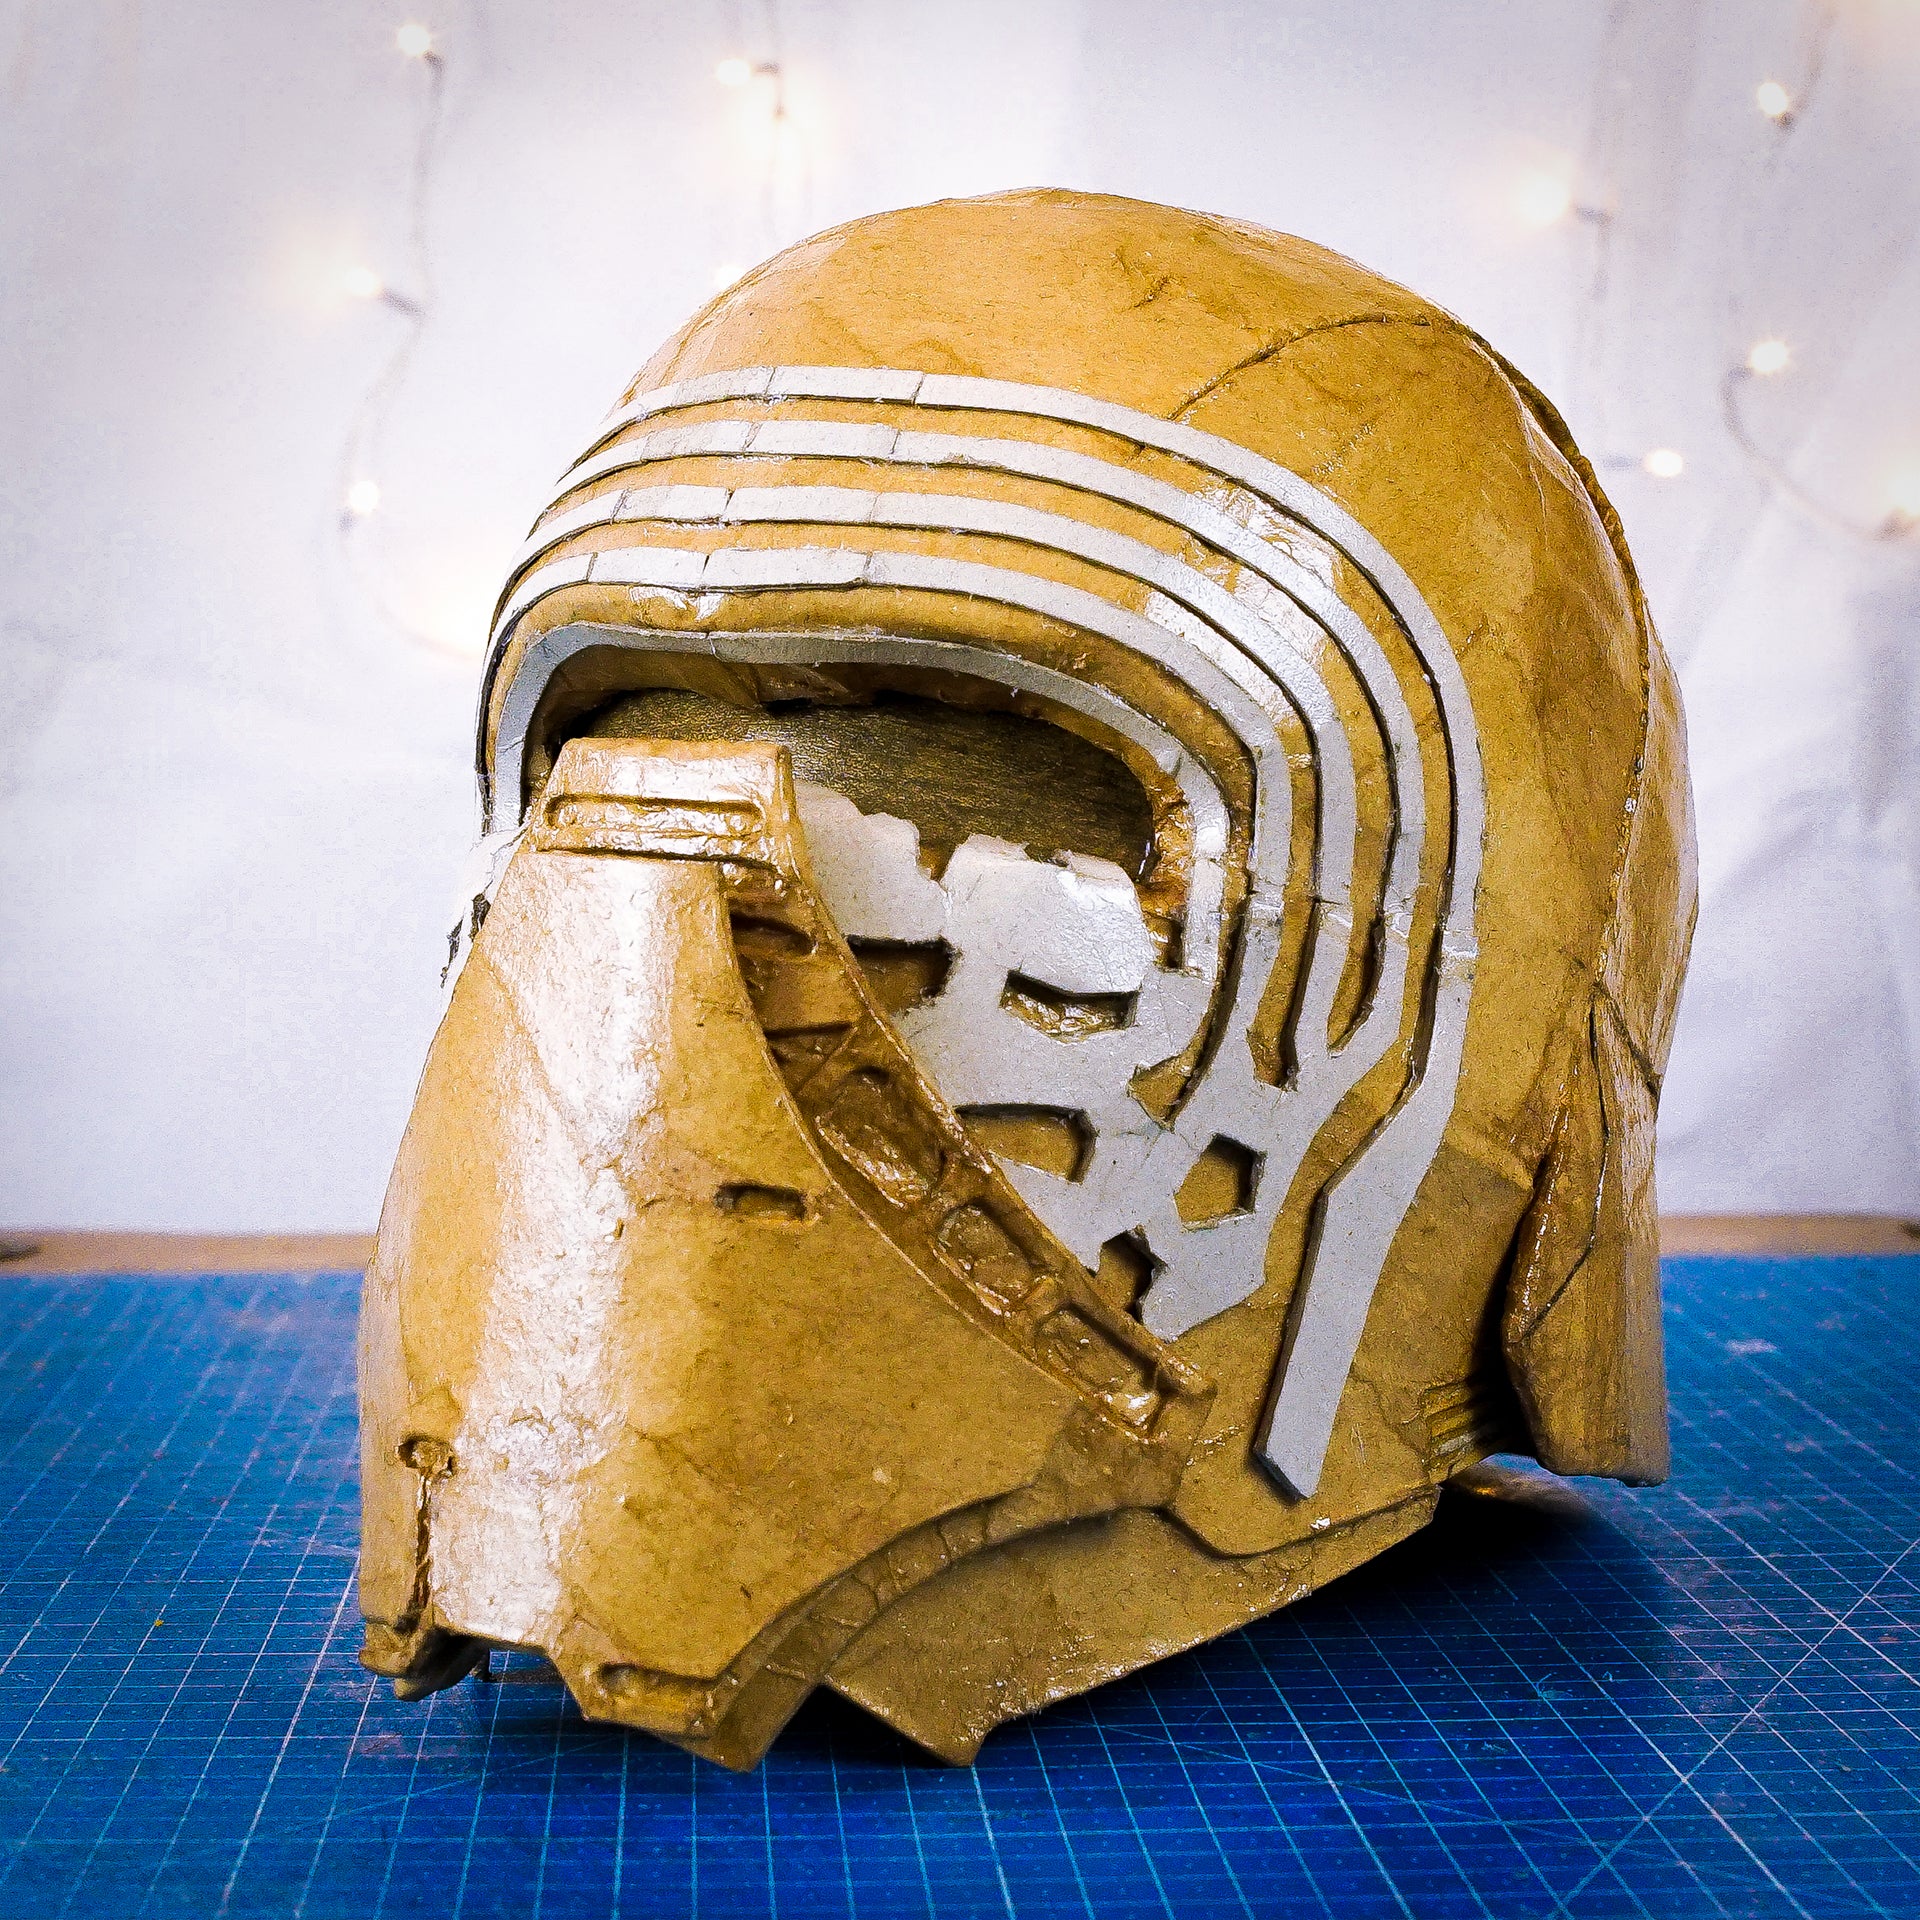 spektrum min Estate Kylo Ren Helmet TEMPLATES for cardboard DIY – Epic Cardboard Props